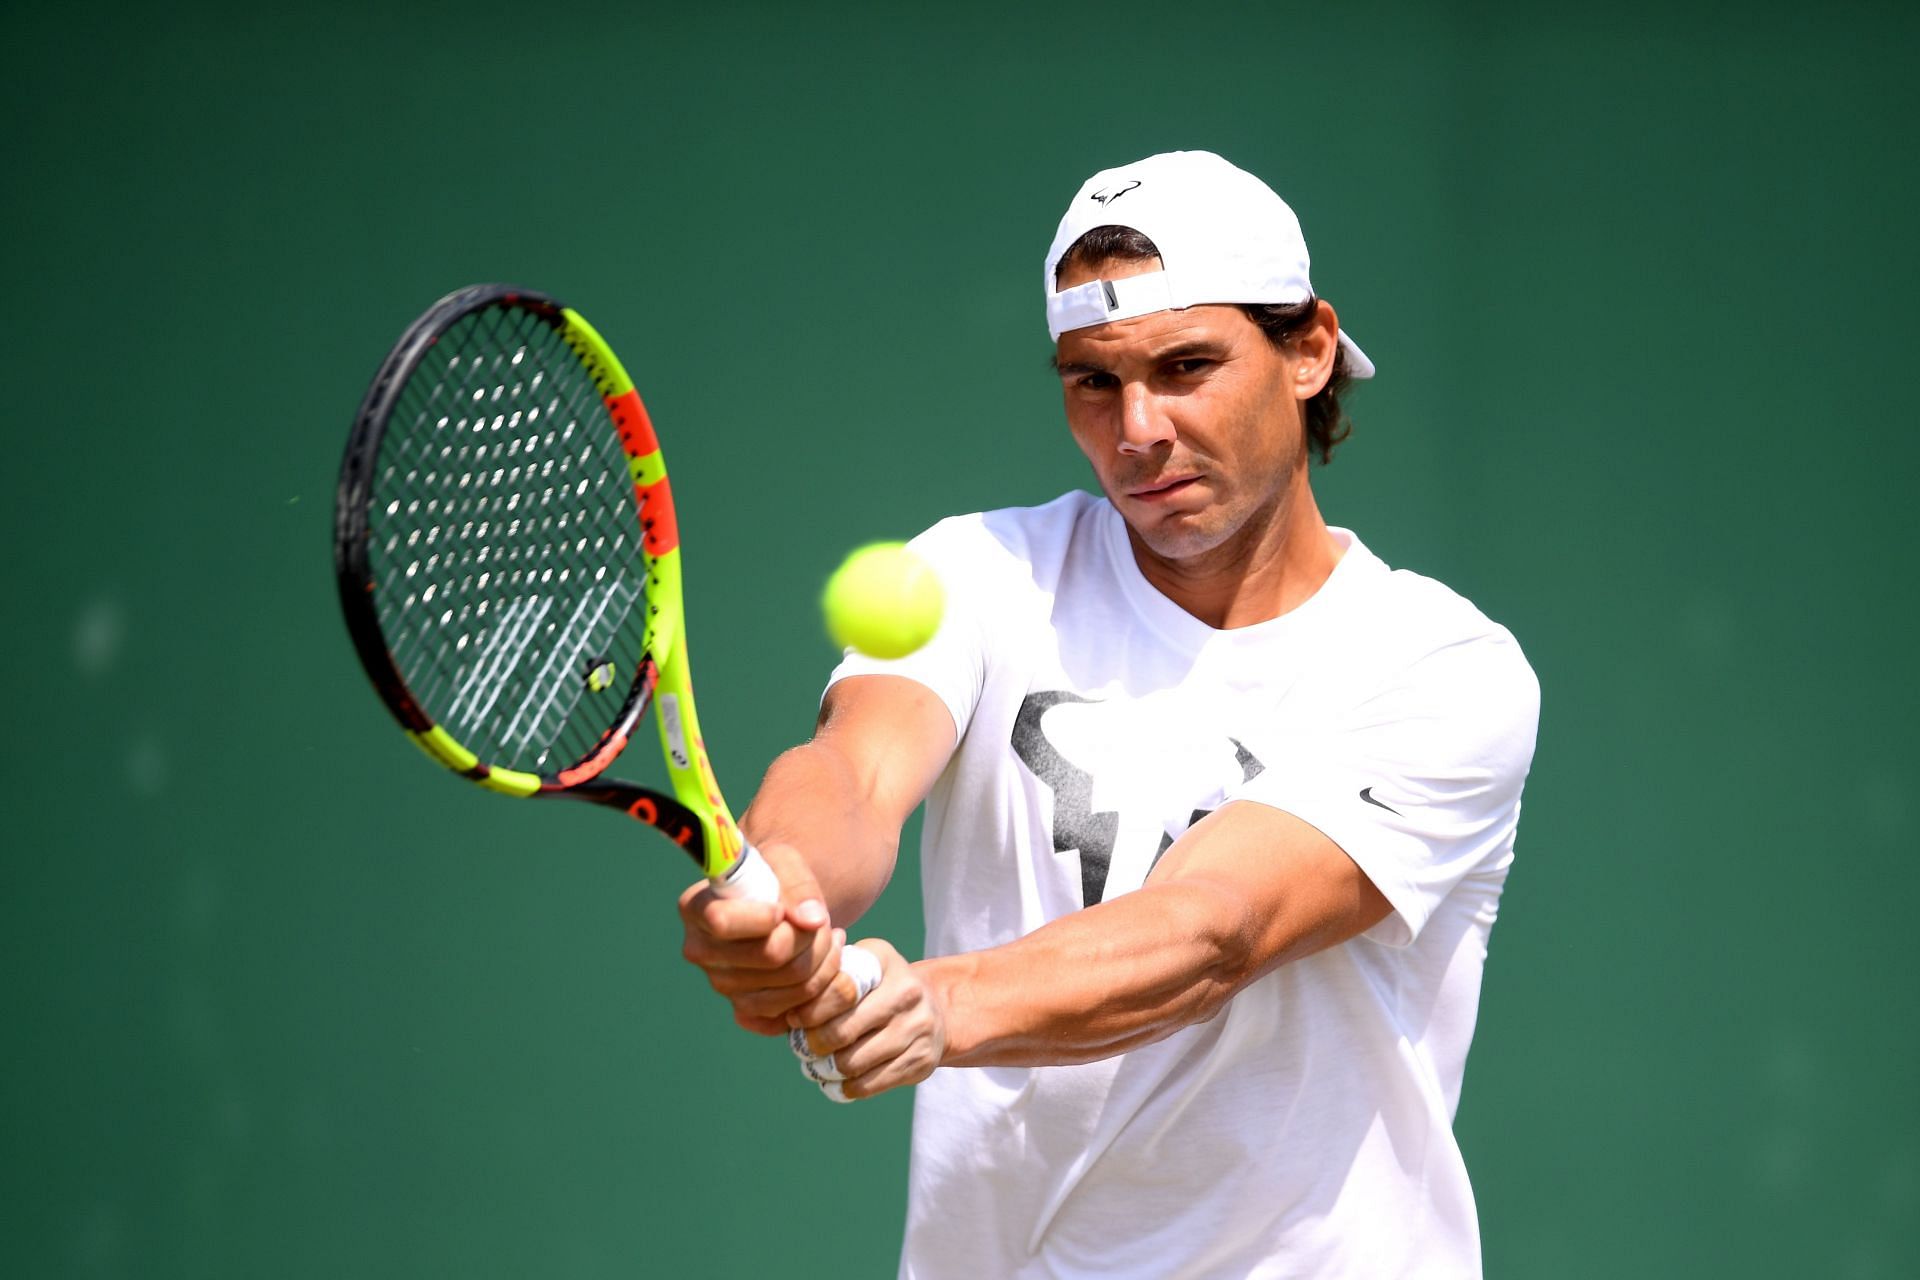 Rafael Nadal defeated Stan Wawrinka 6-2, 6-3.